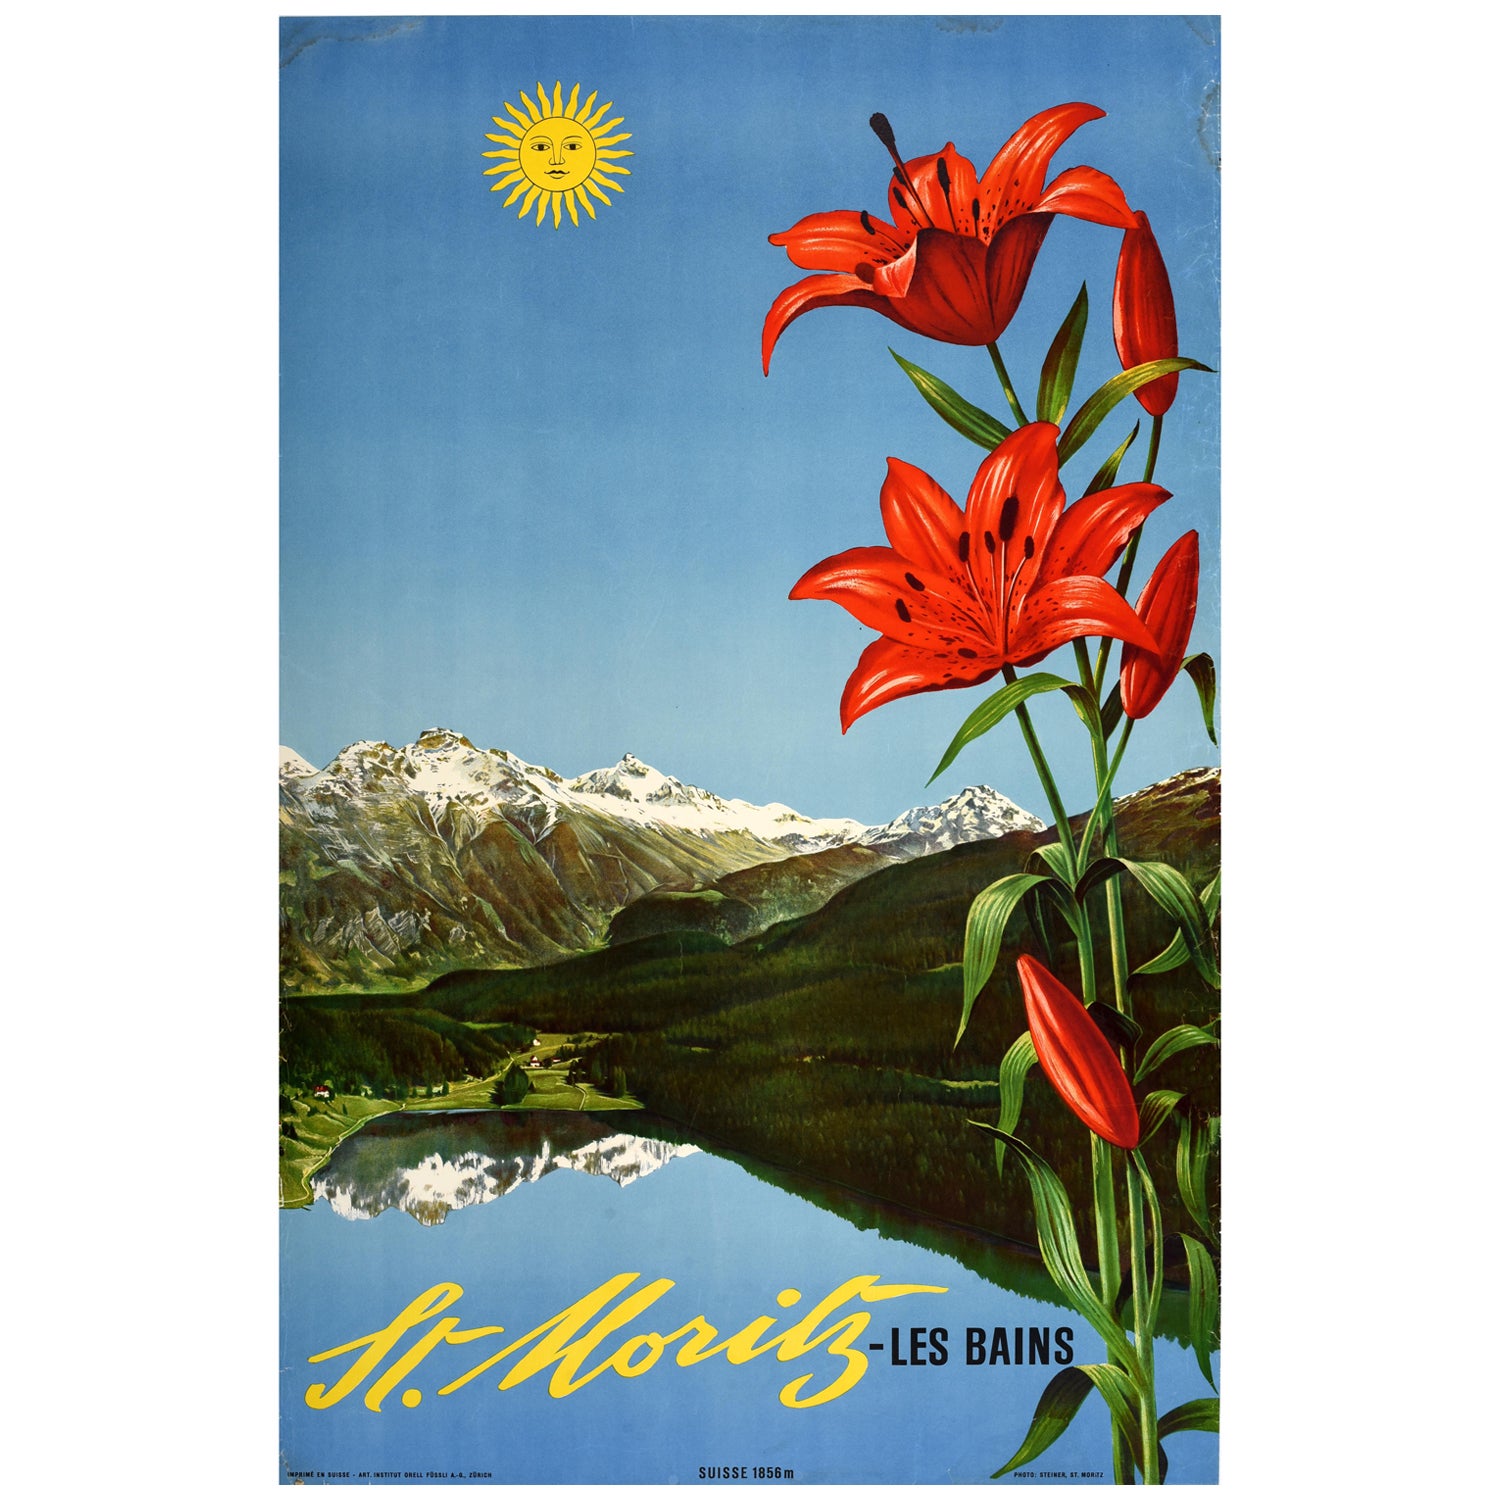 Original Vintage Travel Poster St Moritz Les Bains Switzerland Albert Steiner For Sale